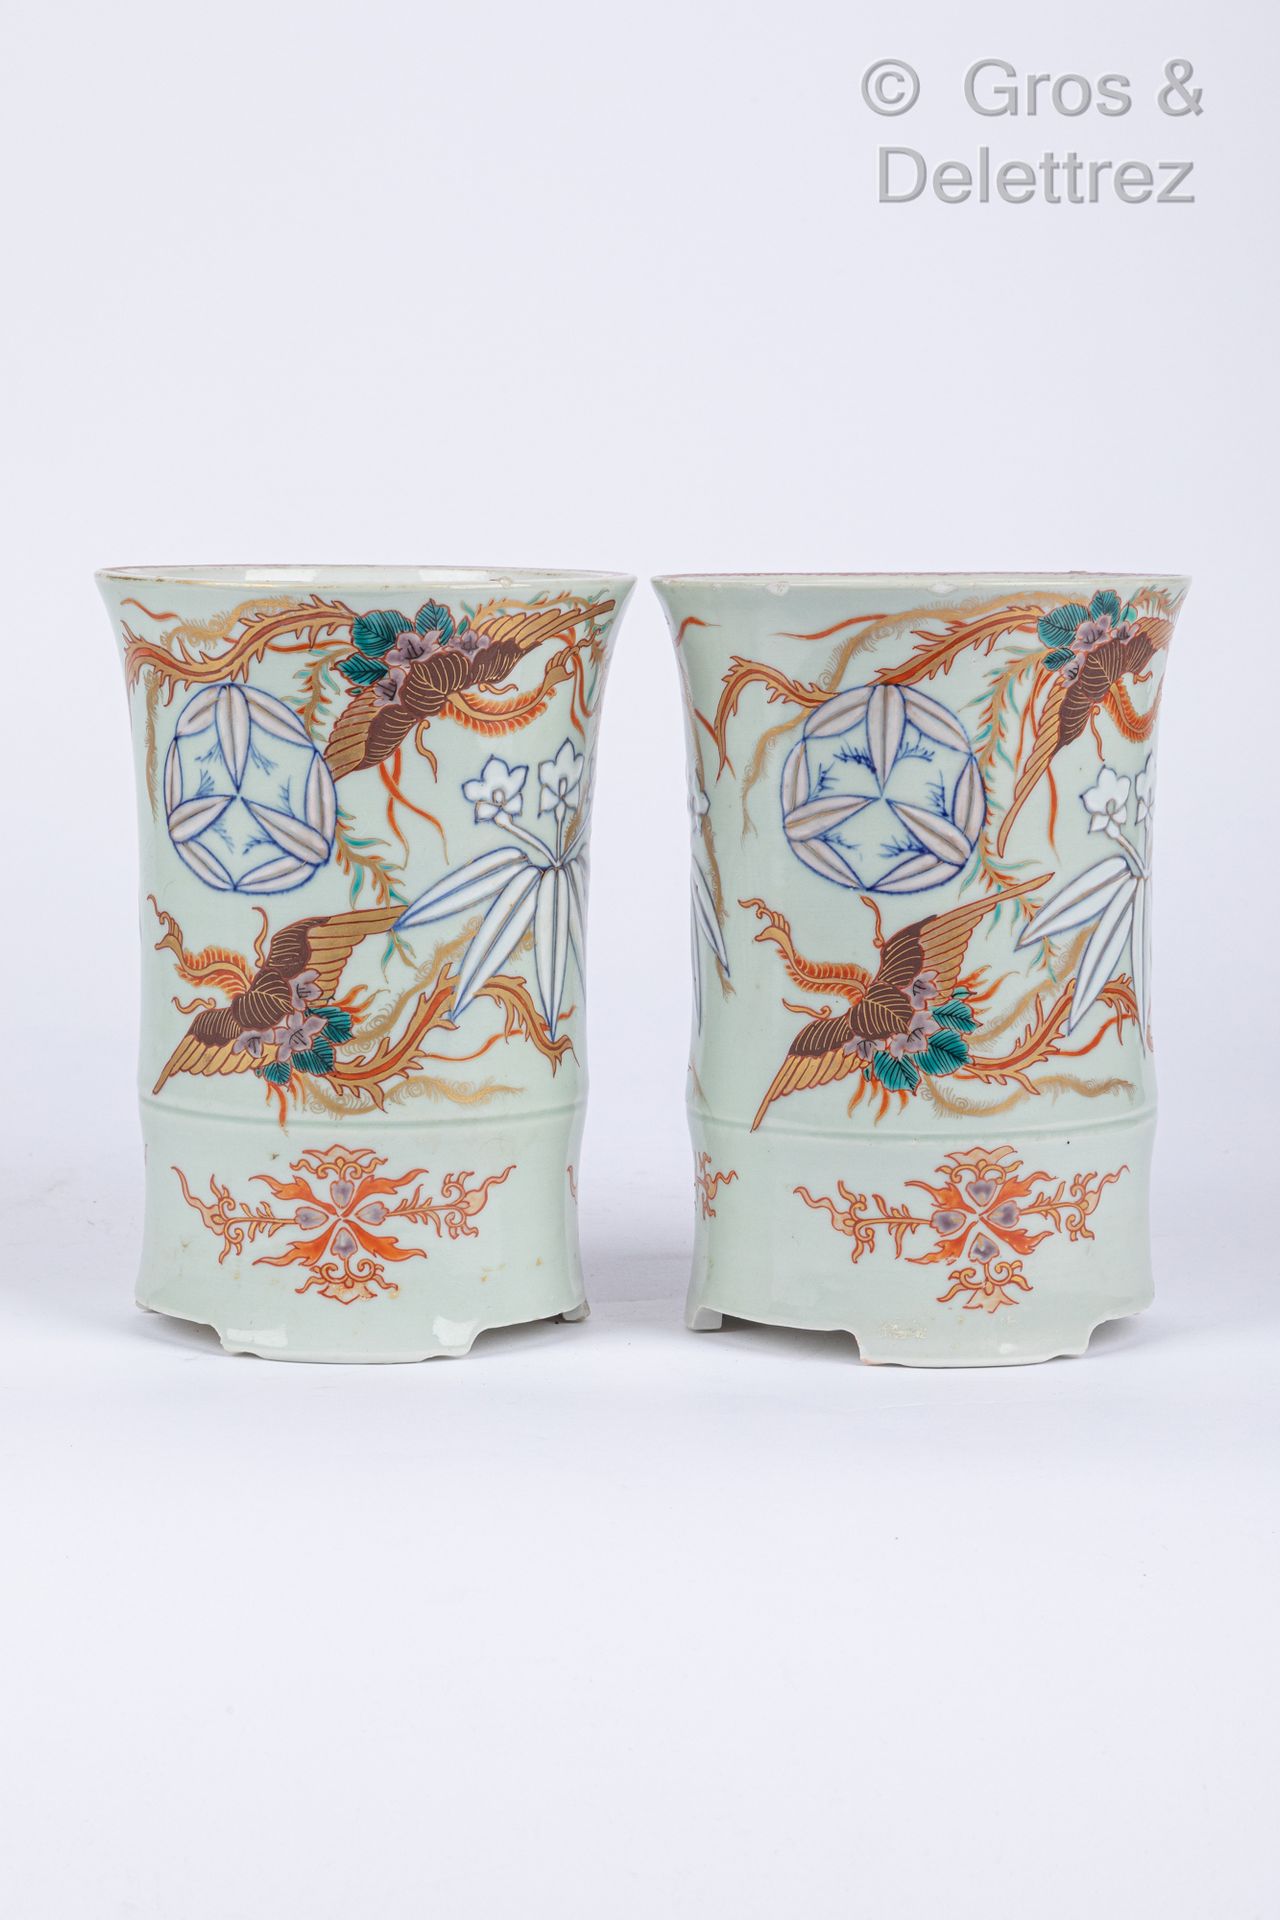 Null 日本。一对多色瓷器花盆，装饰有花中凤凰。

19世纪

高度：19厘米19厘米

划痕